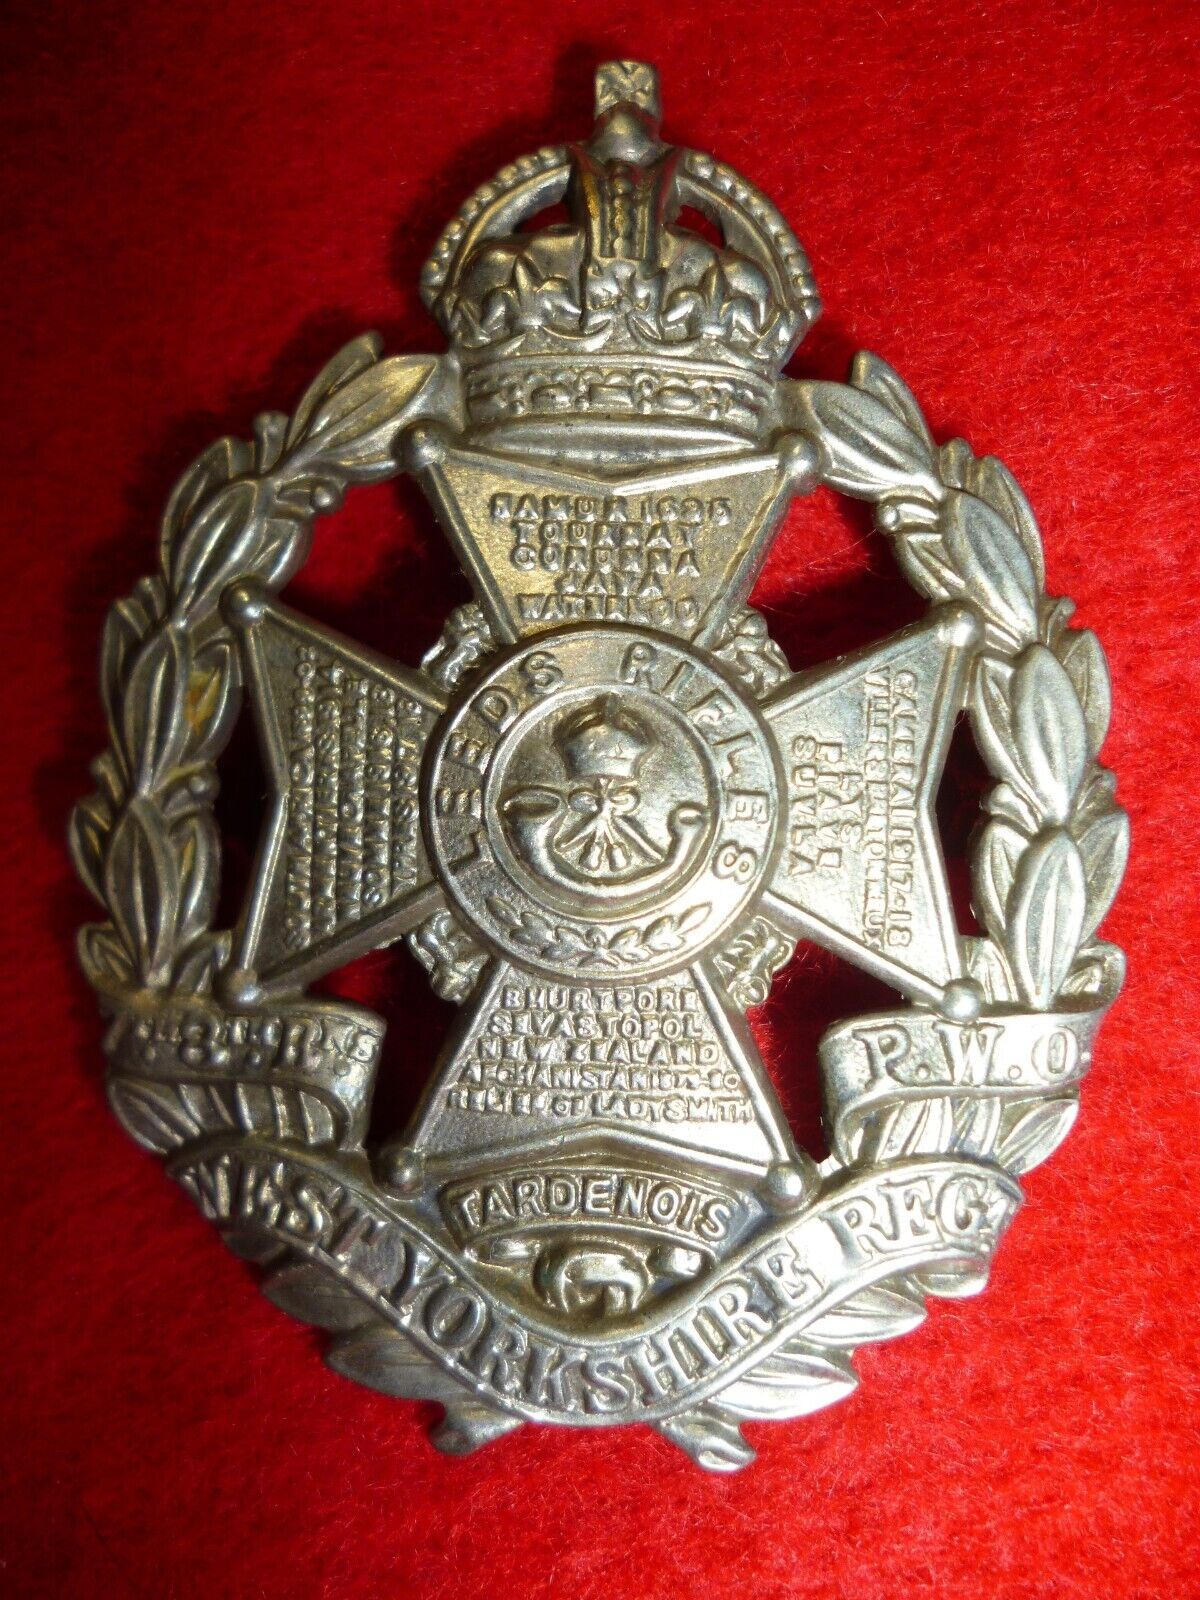 7th/8th Bn. (leeds Rifles) West Yorkshire Regiment Kc Cap Badge